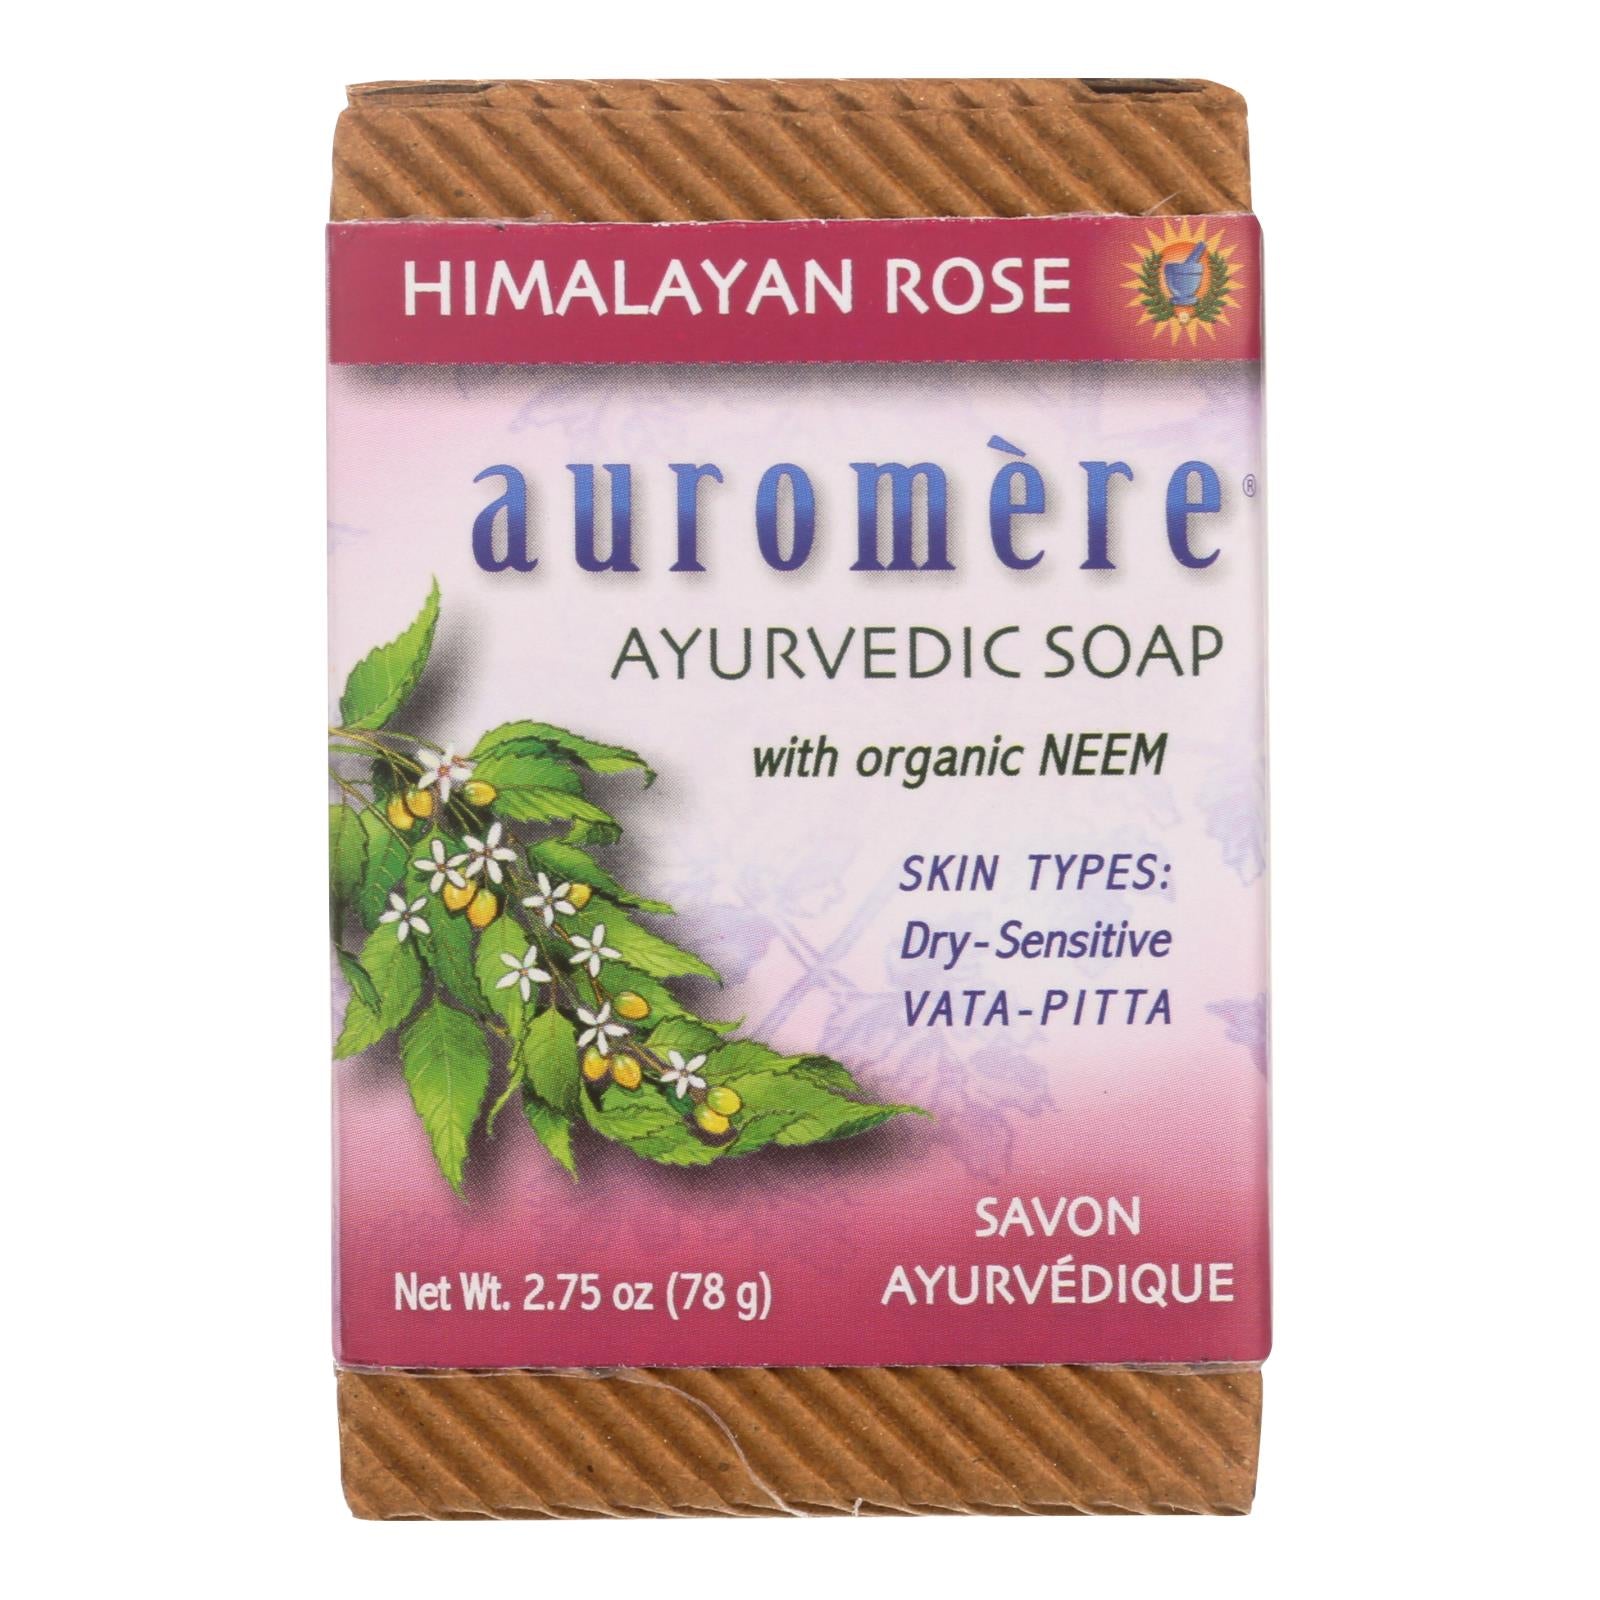 Auromere, Auromere Ayurvedic Bar Soap Himalayan Rose - 2.75 oz